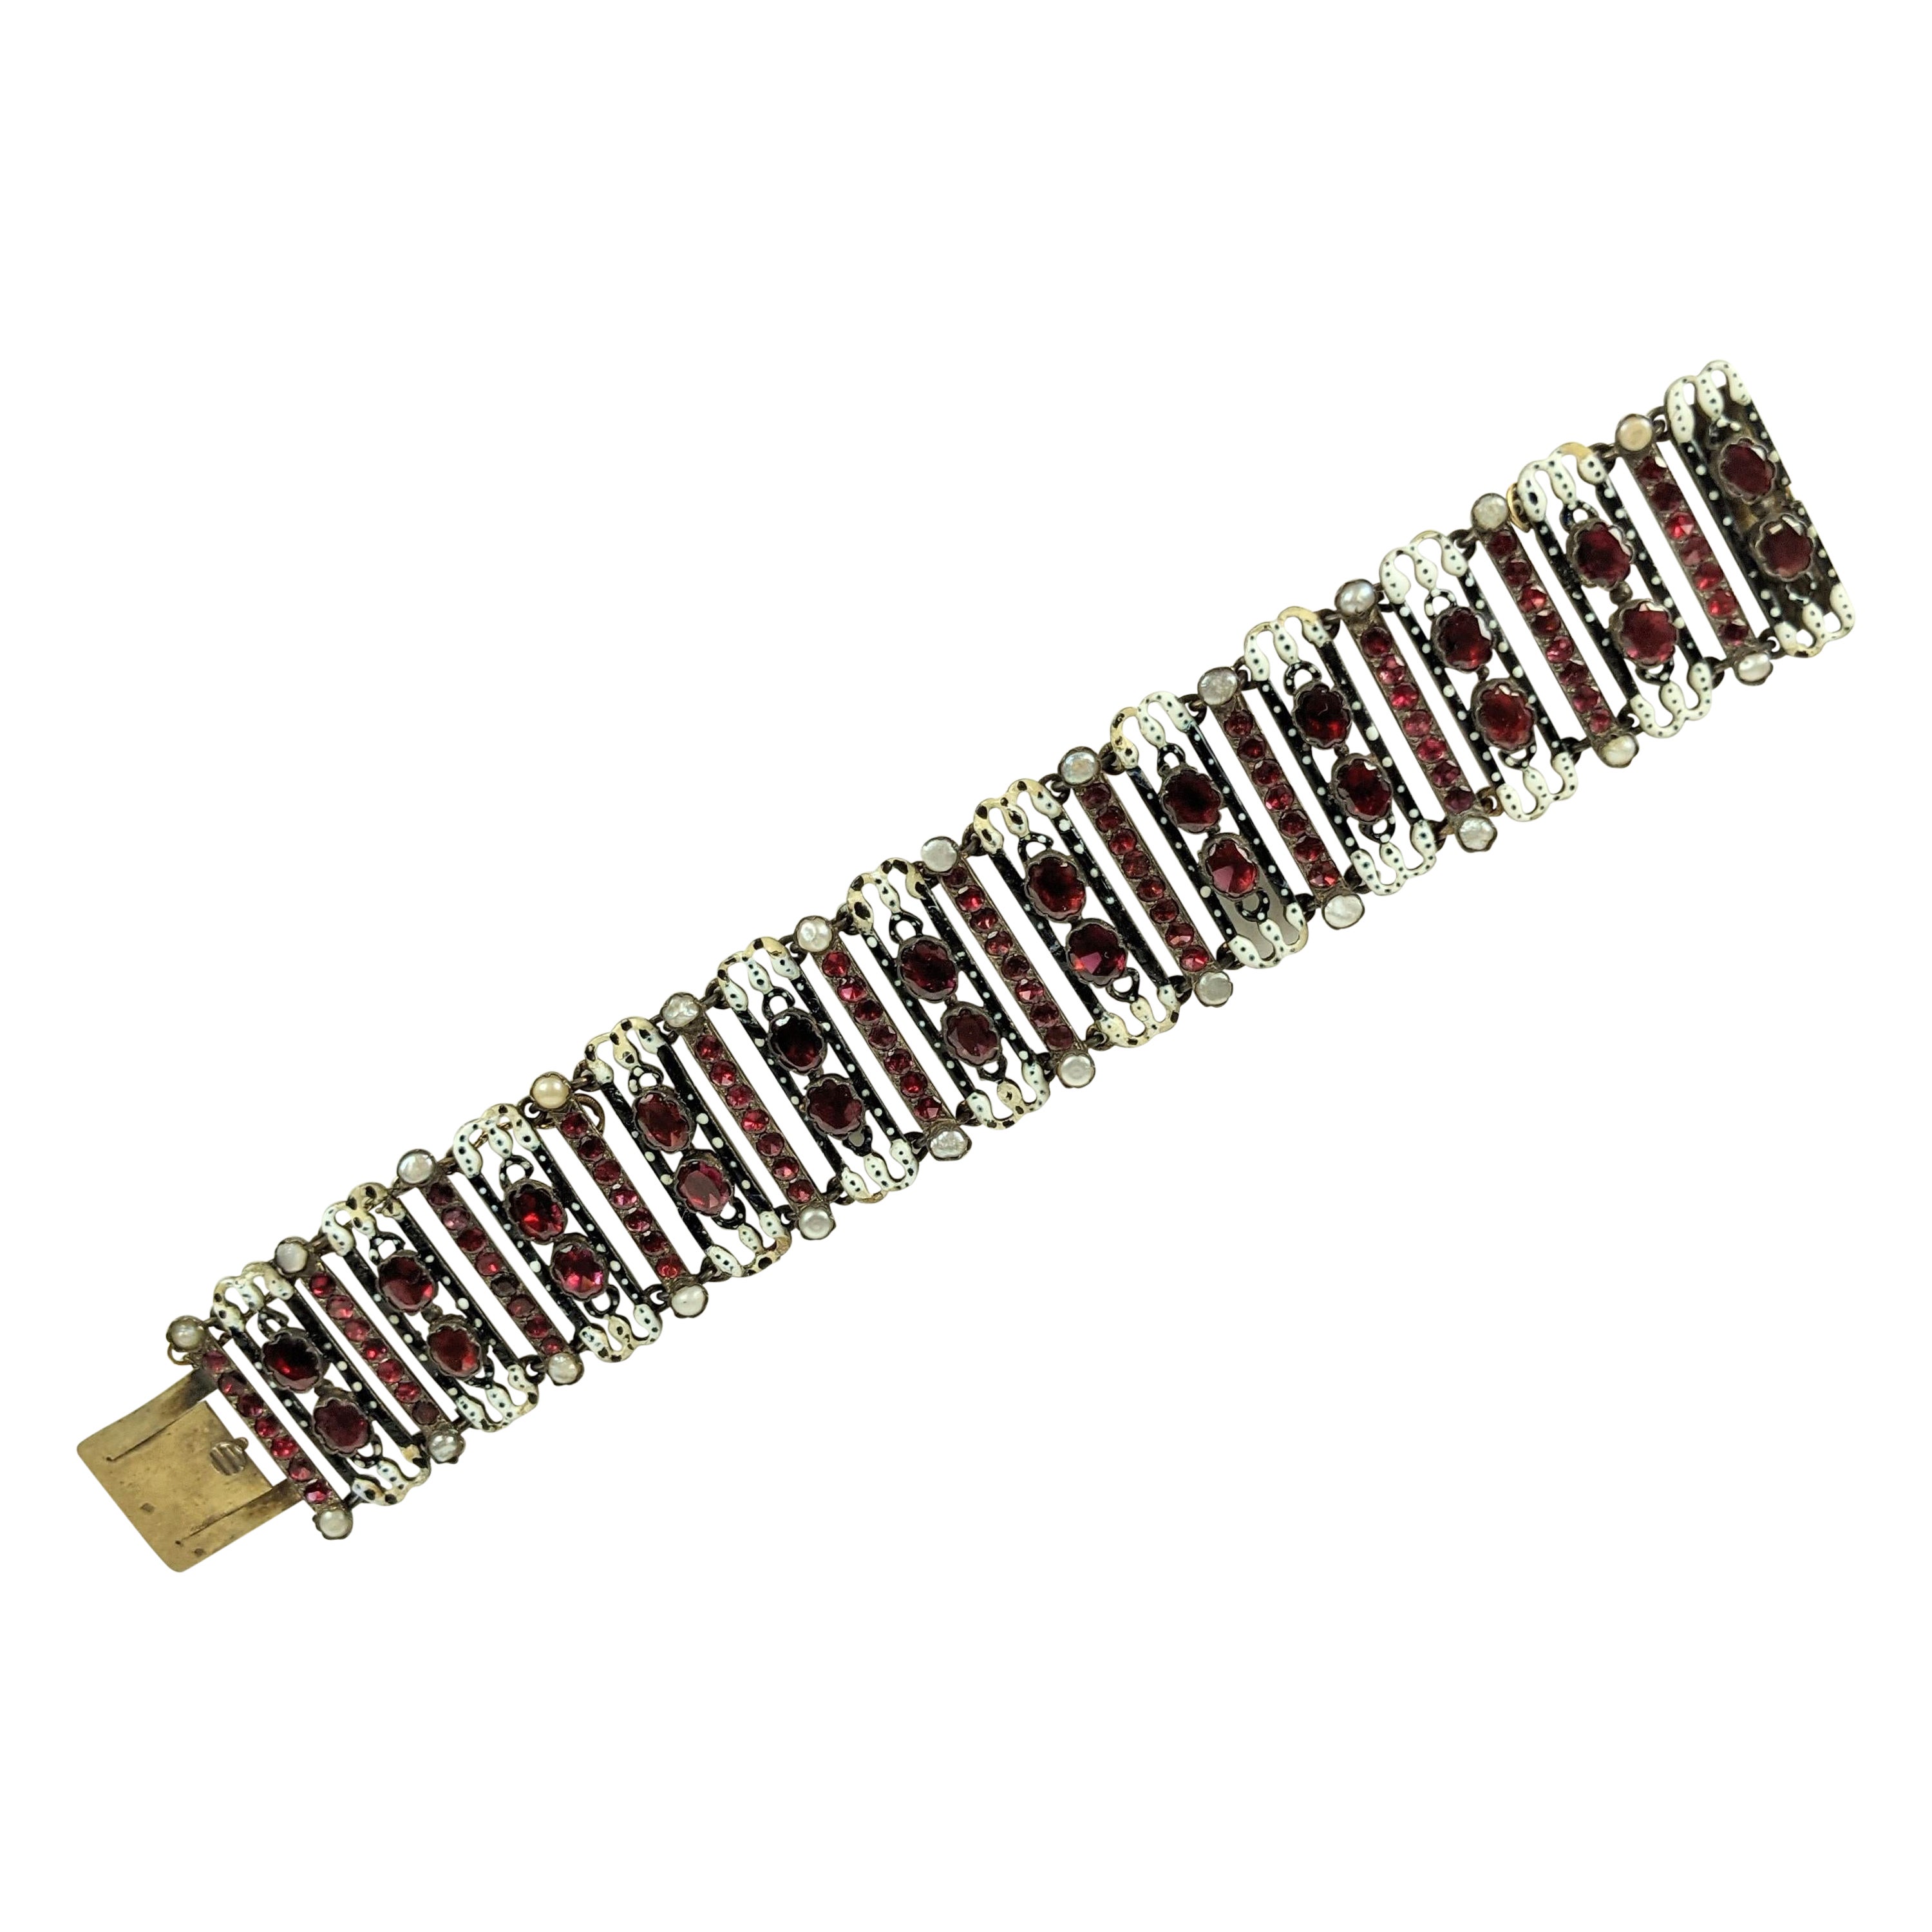 Fine French Garnet and Enamel 19th Century Bracelet